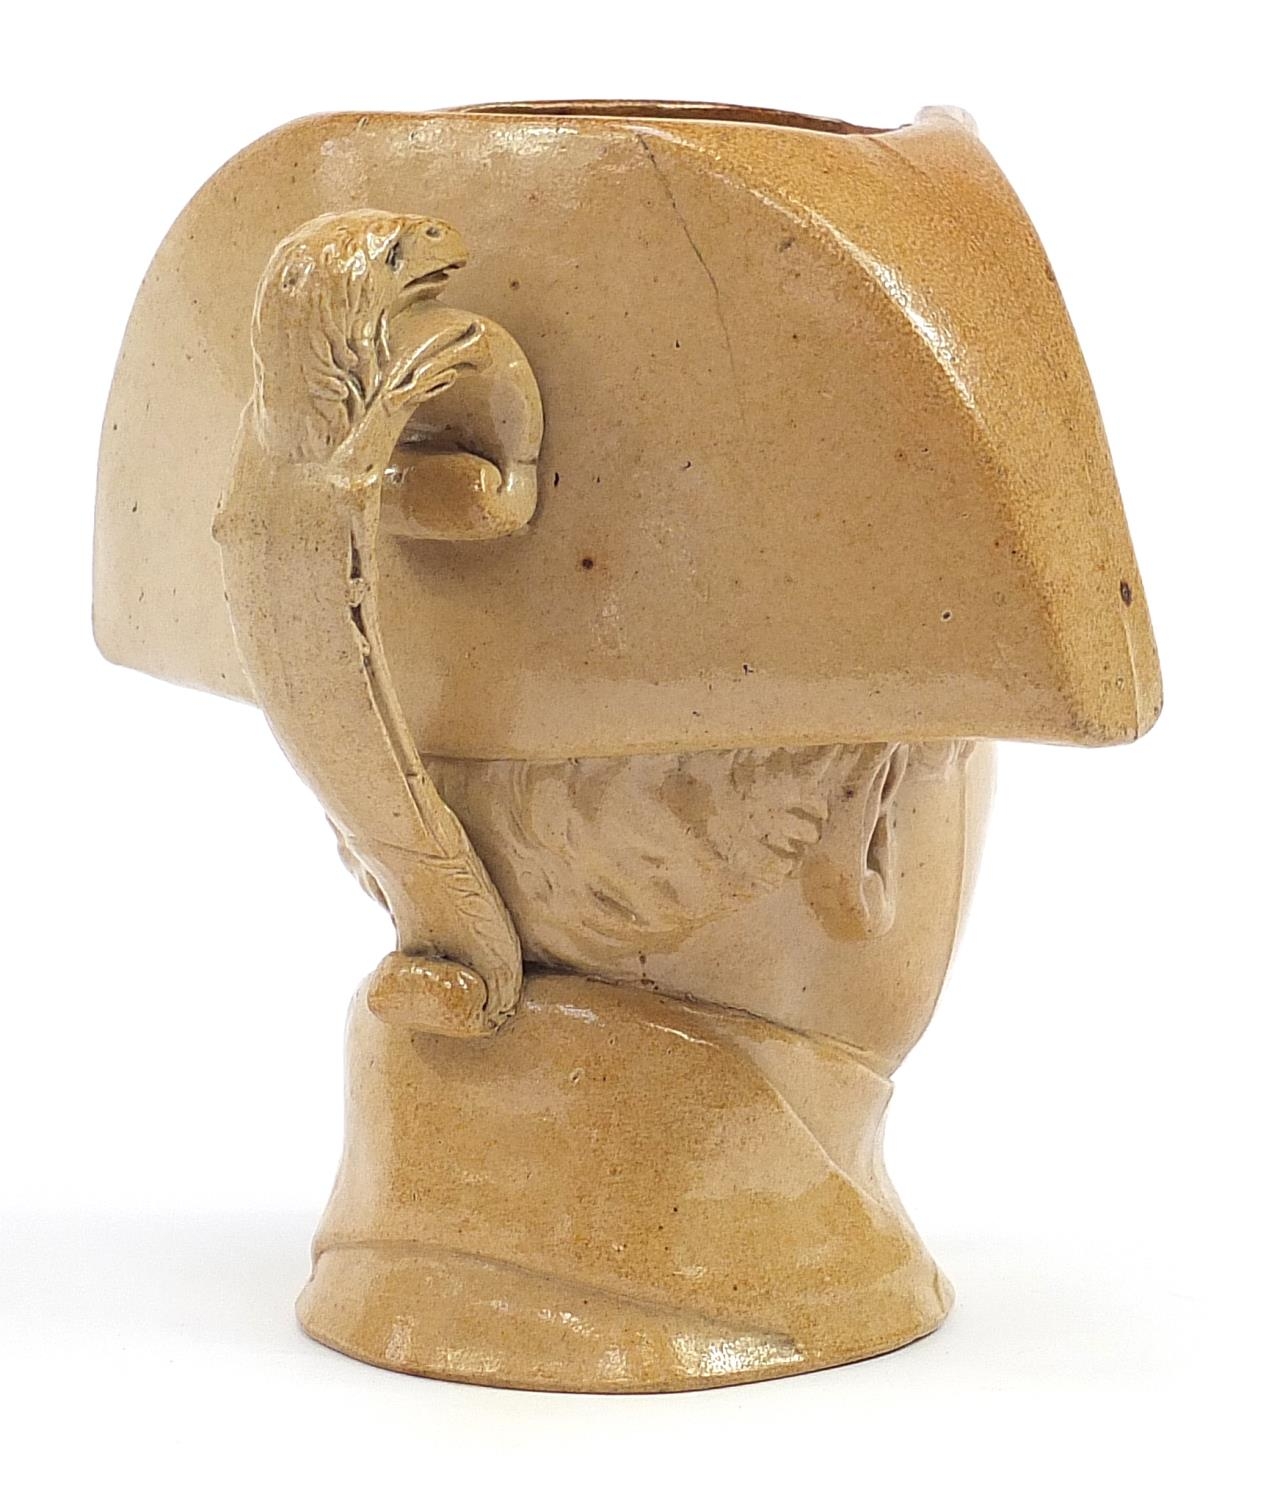 Stephen Green of Lambeth, 19th century salt glaze character jug in the form of Napoleon Bonaparte, - Image 2 of 4